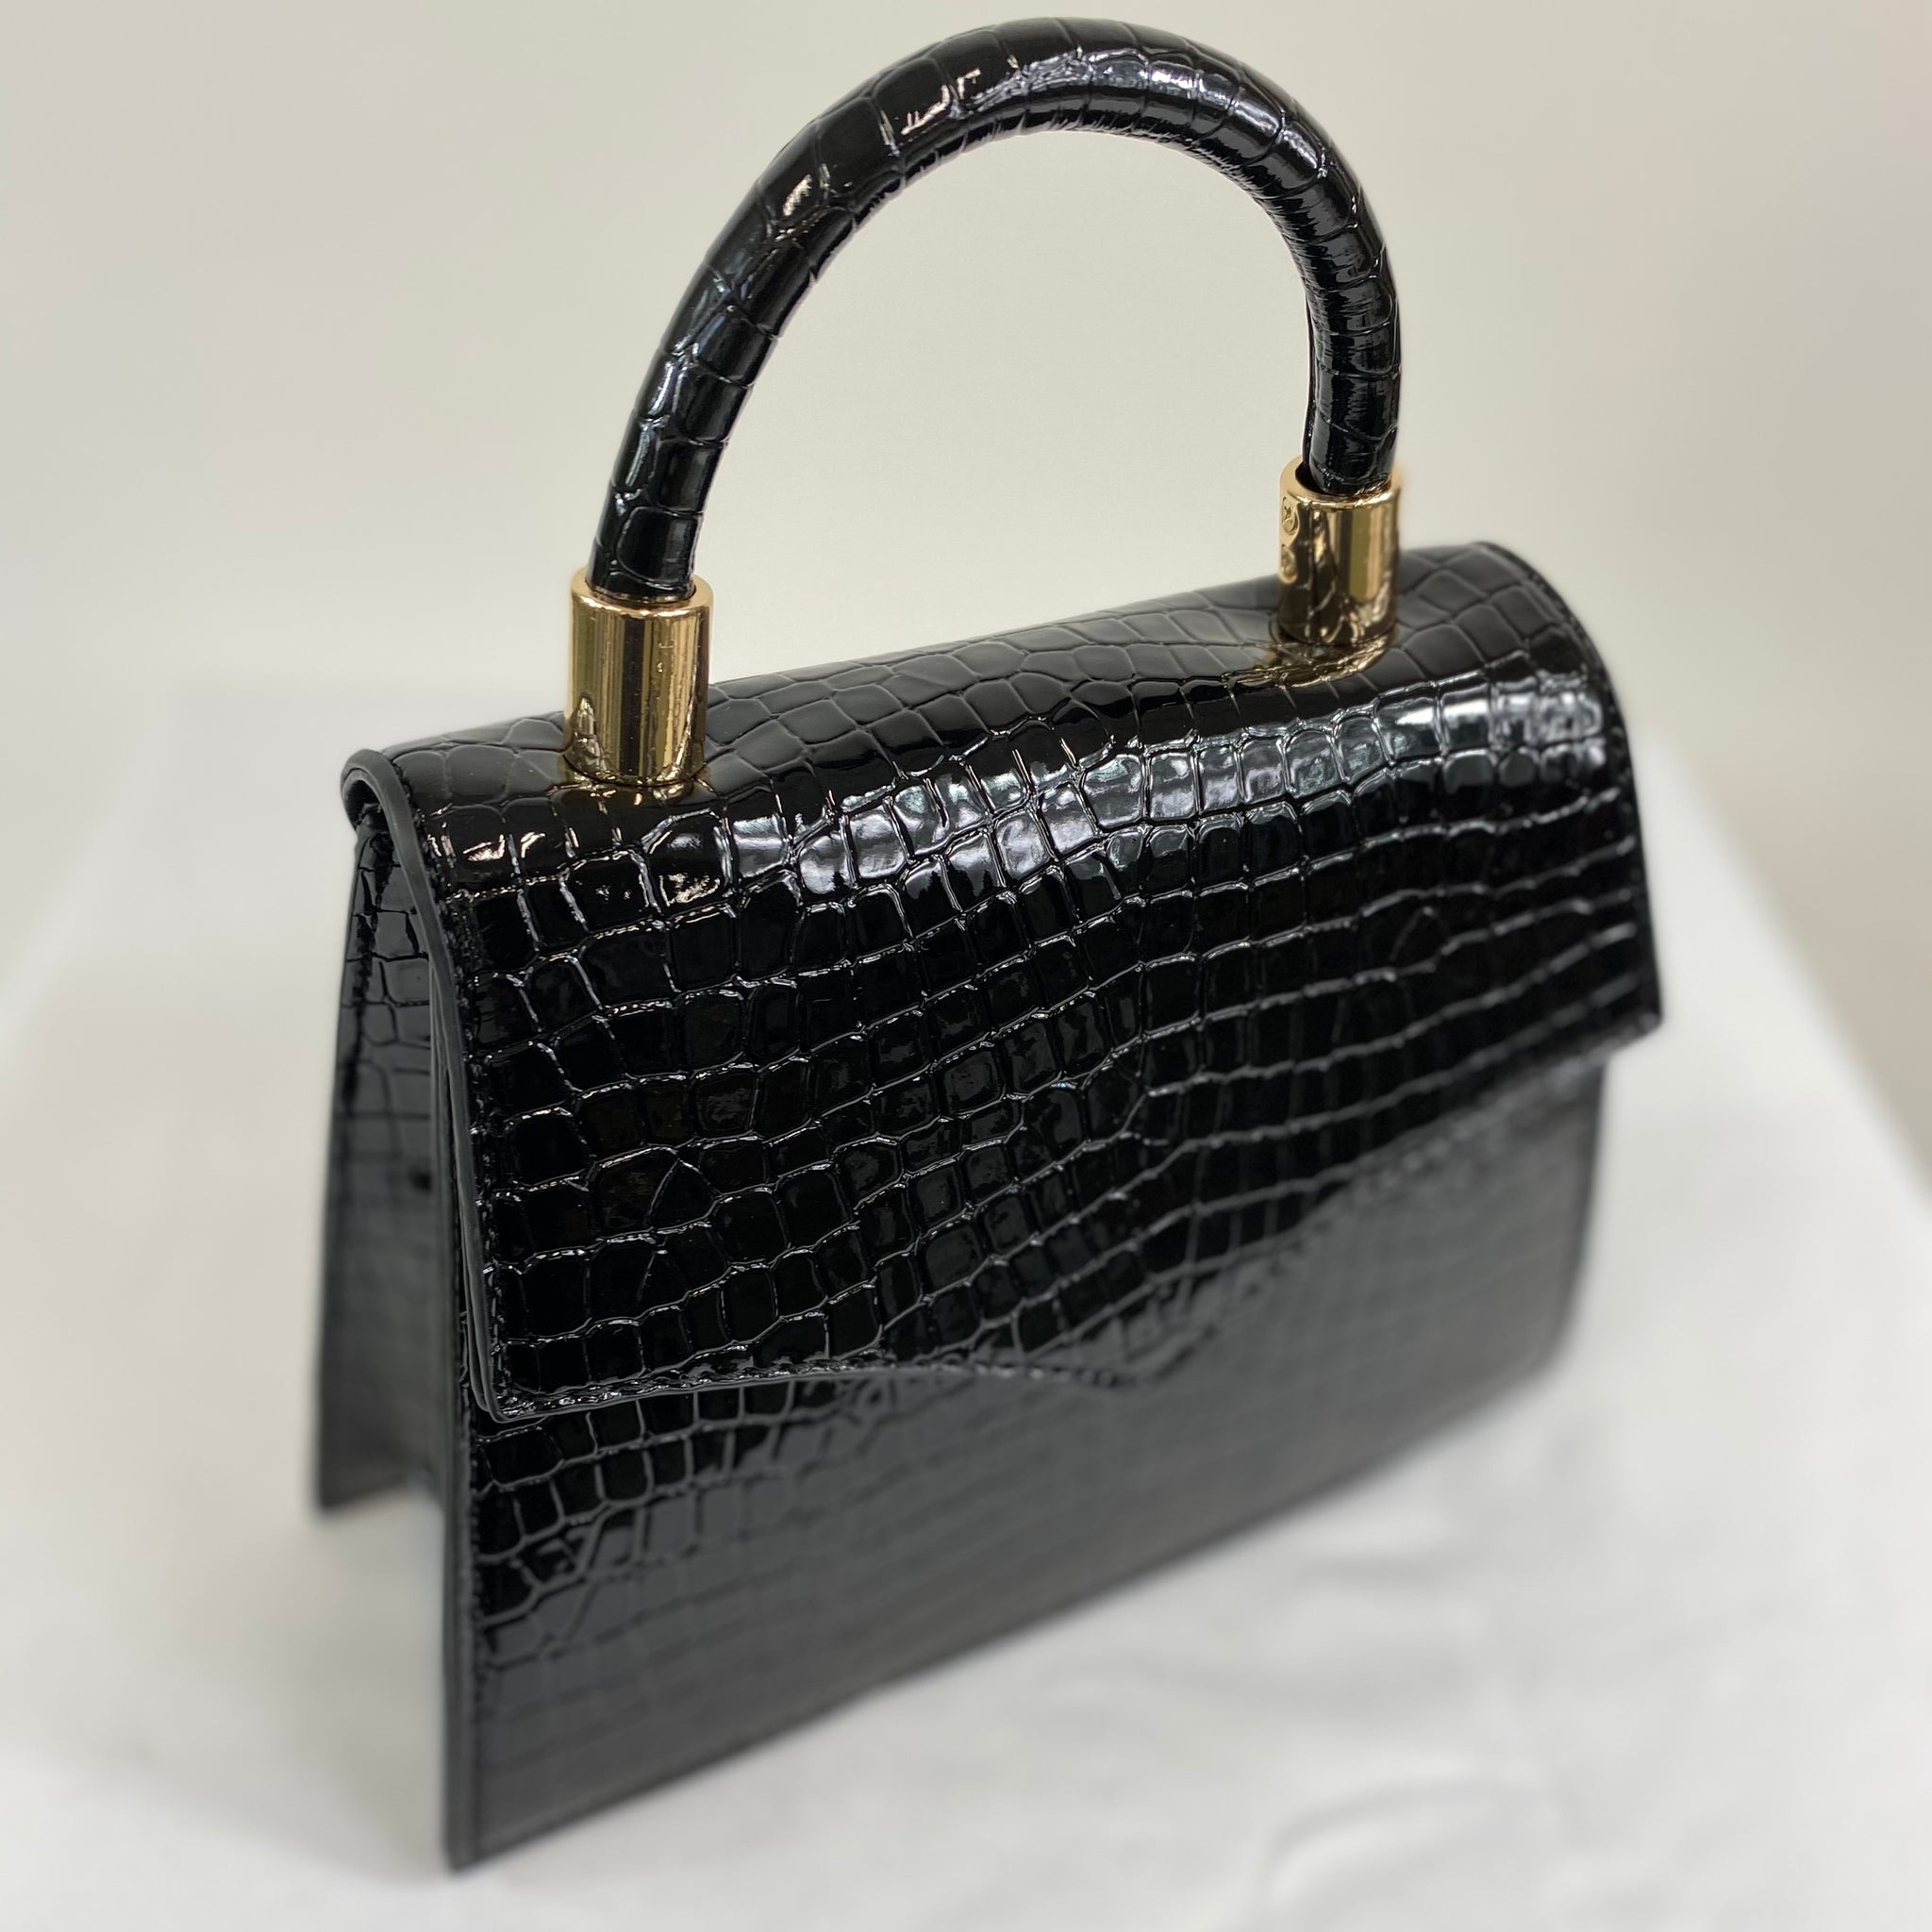 Classic Penny Handbag in Black - Vintage Inspired